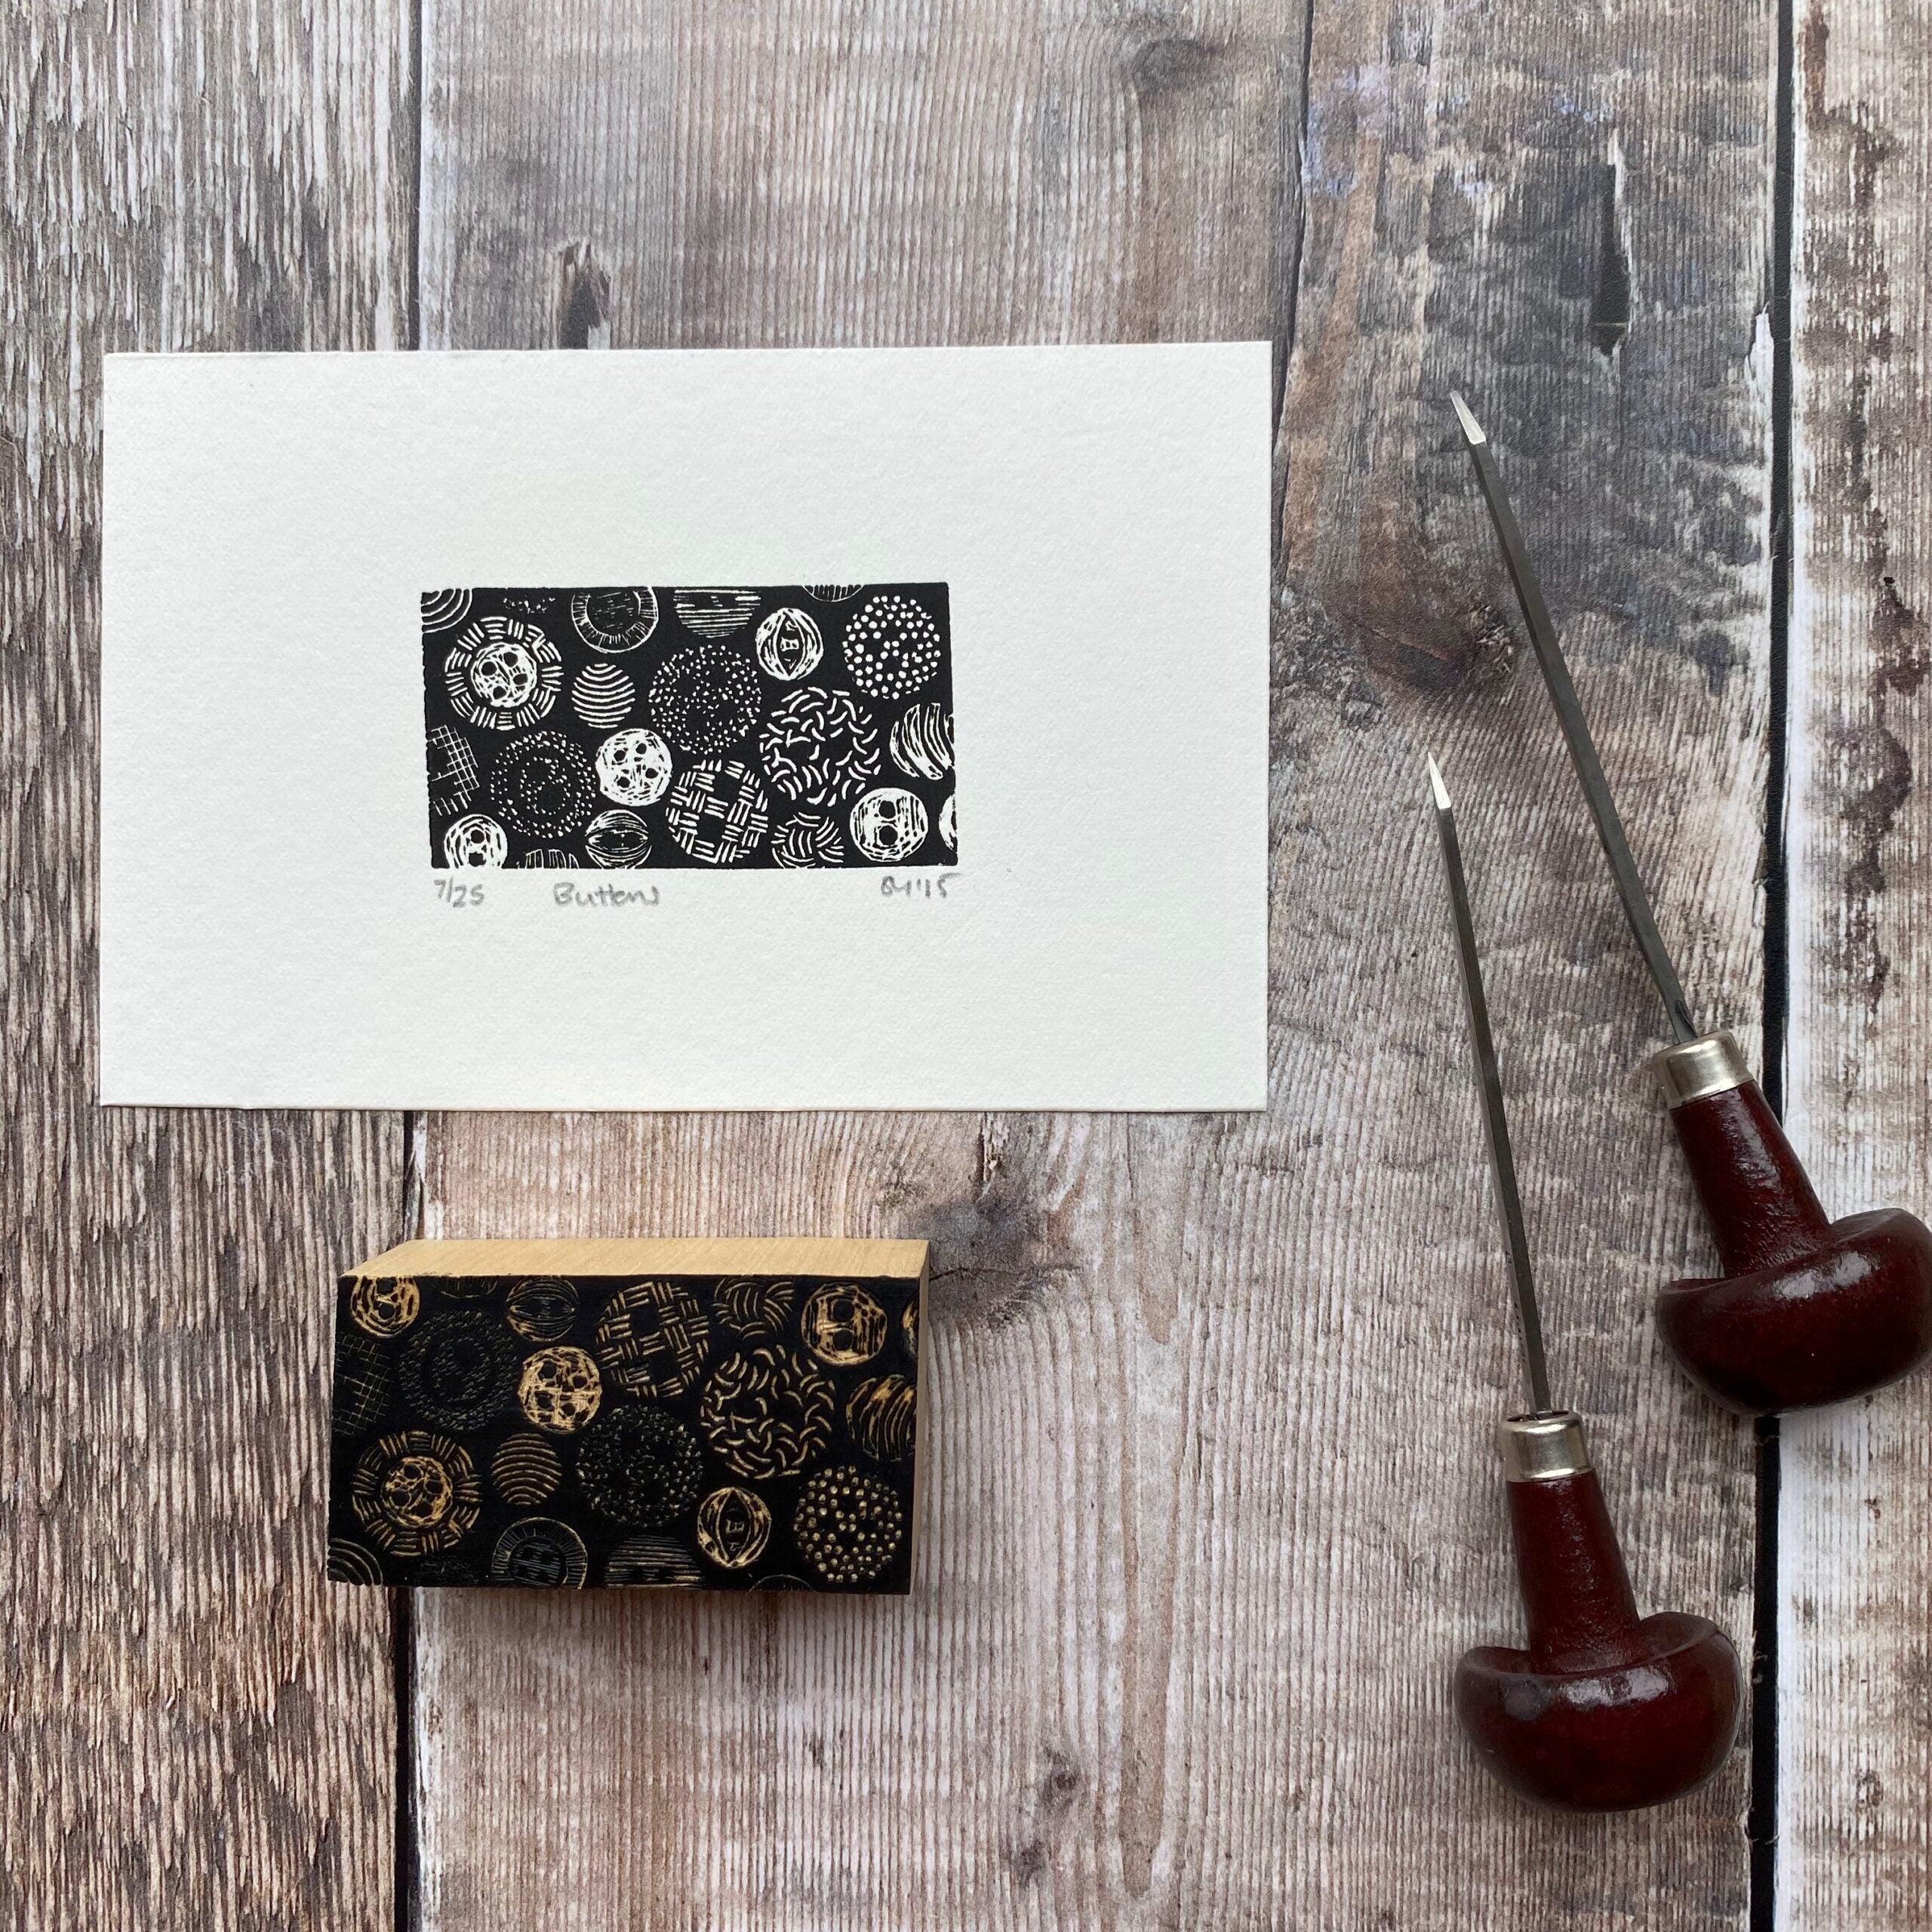 SALE - Buttons - Original Wood Engraving